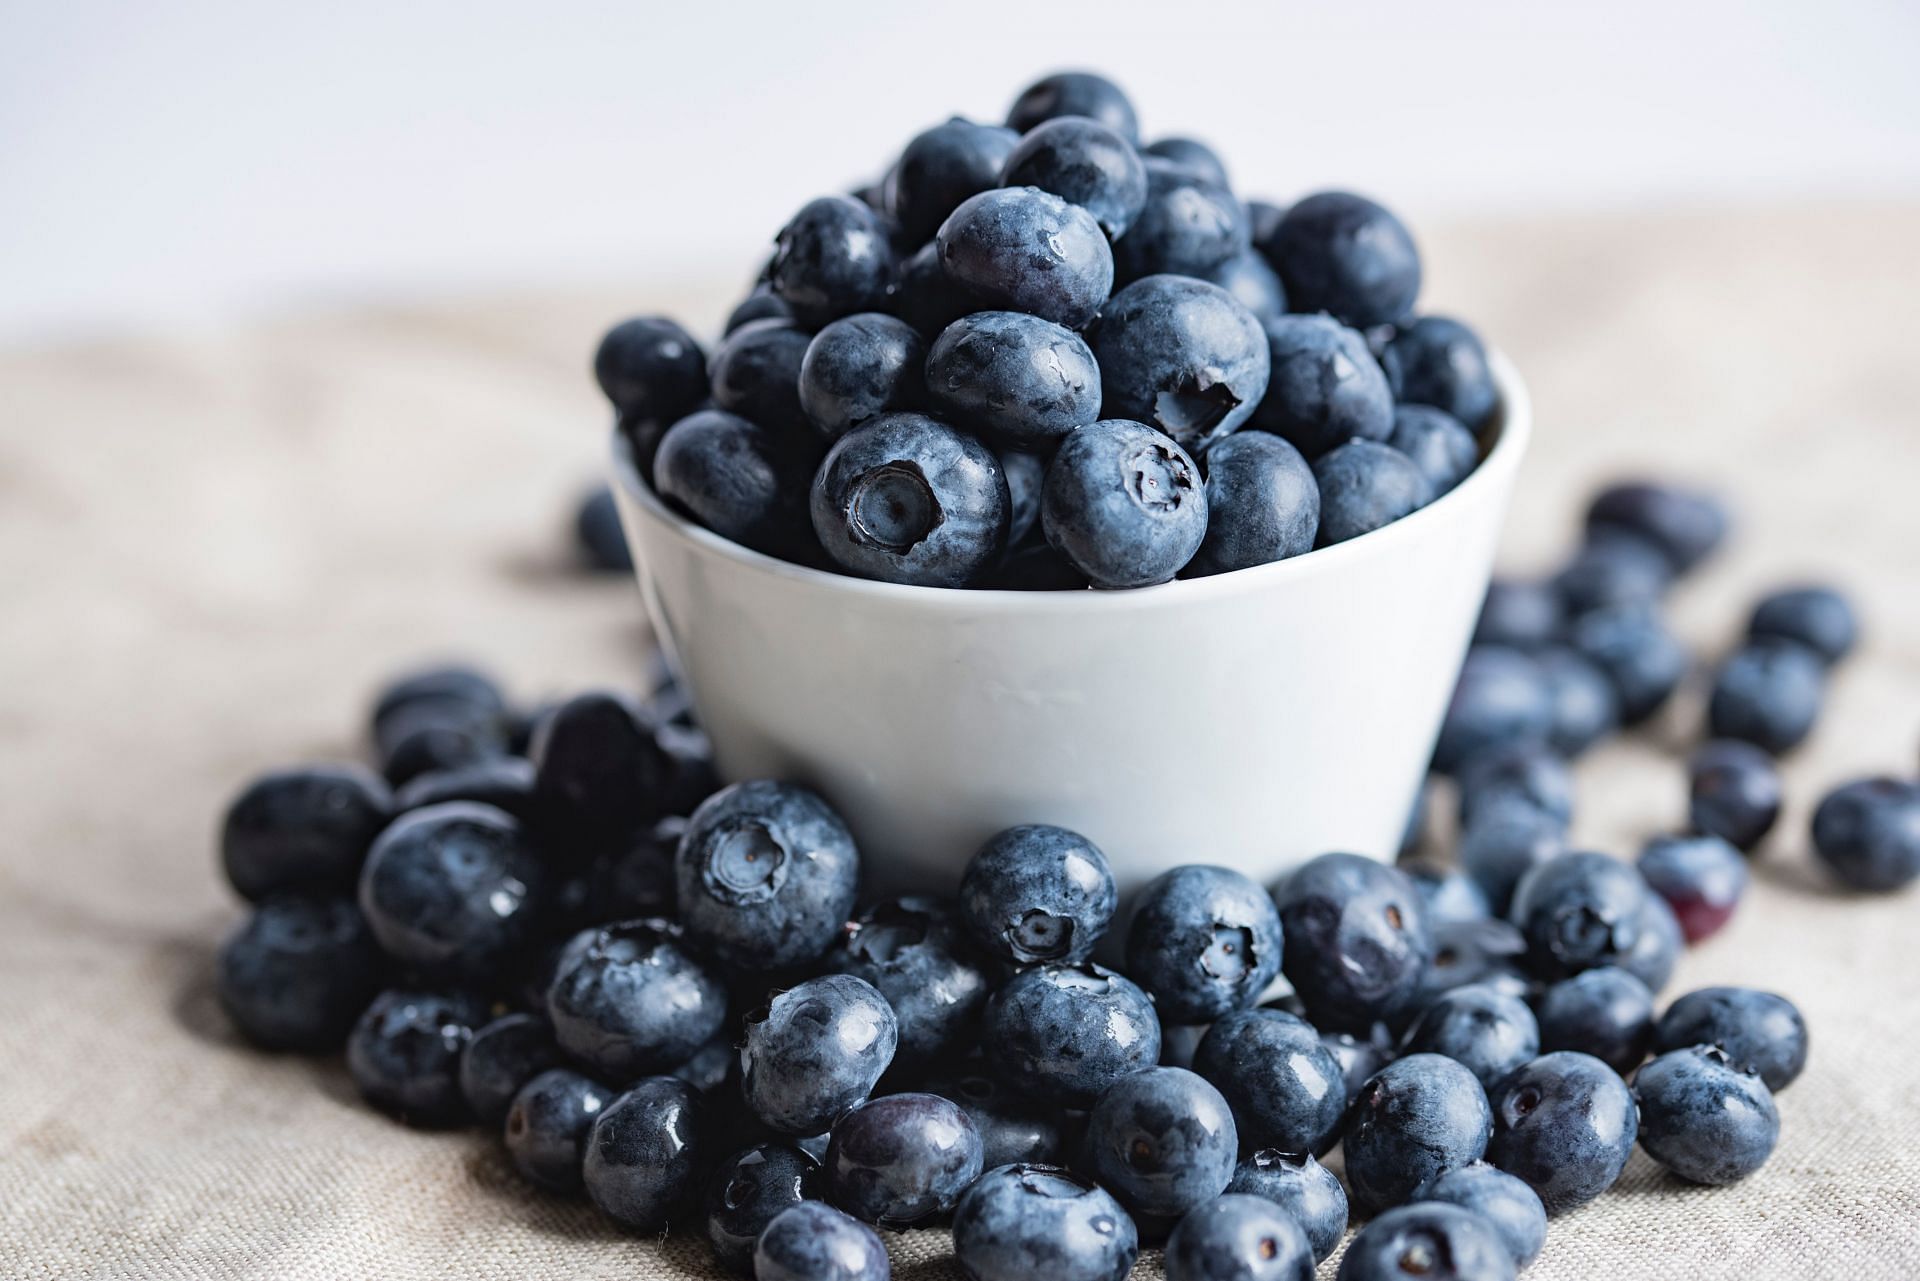 Blueberries are allowed in Phase 2 (Image via Unsplash/Joanna Kosinska)